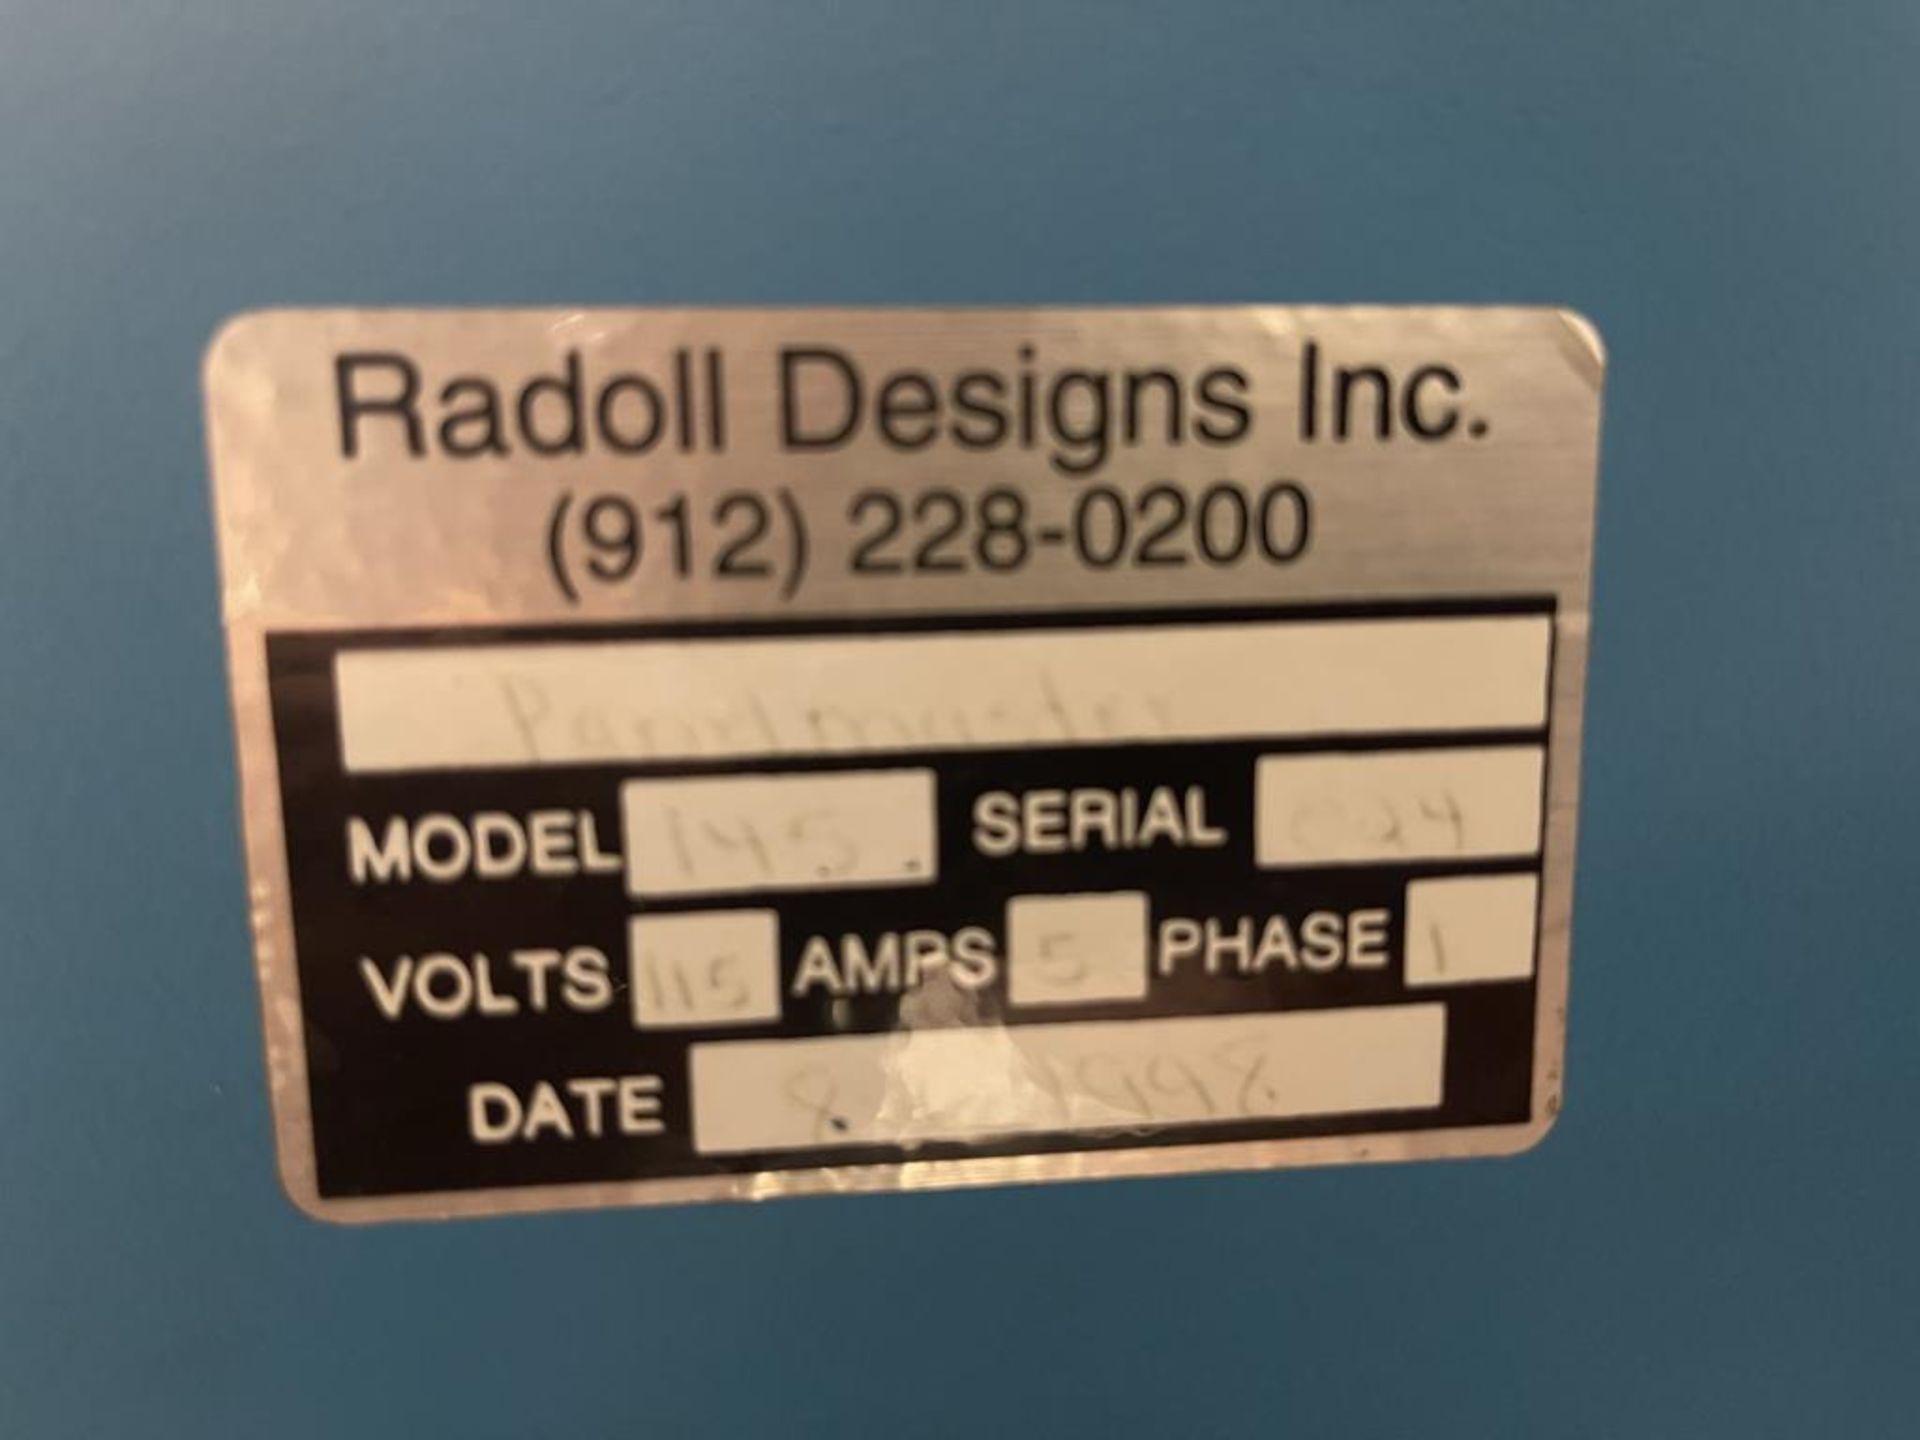 Radoll Designs Panel Saw - Image 3 of 4